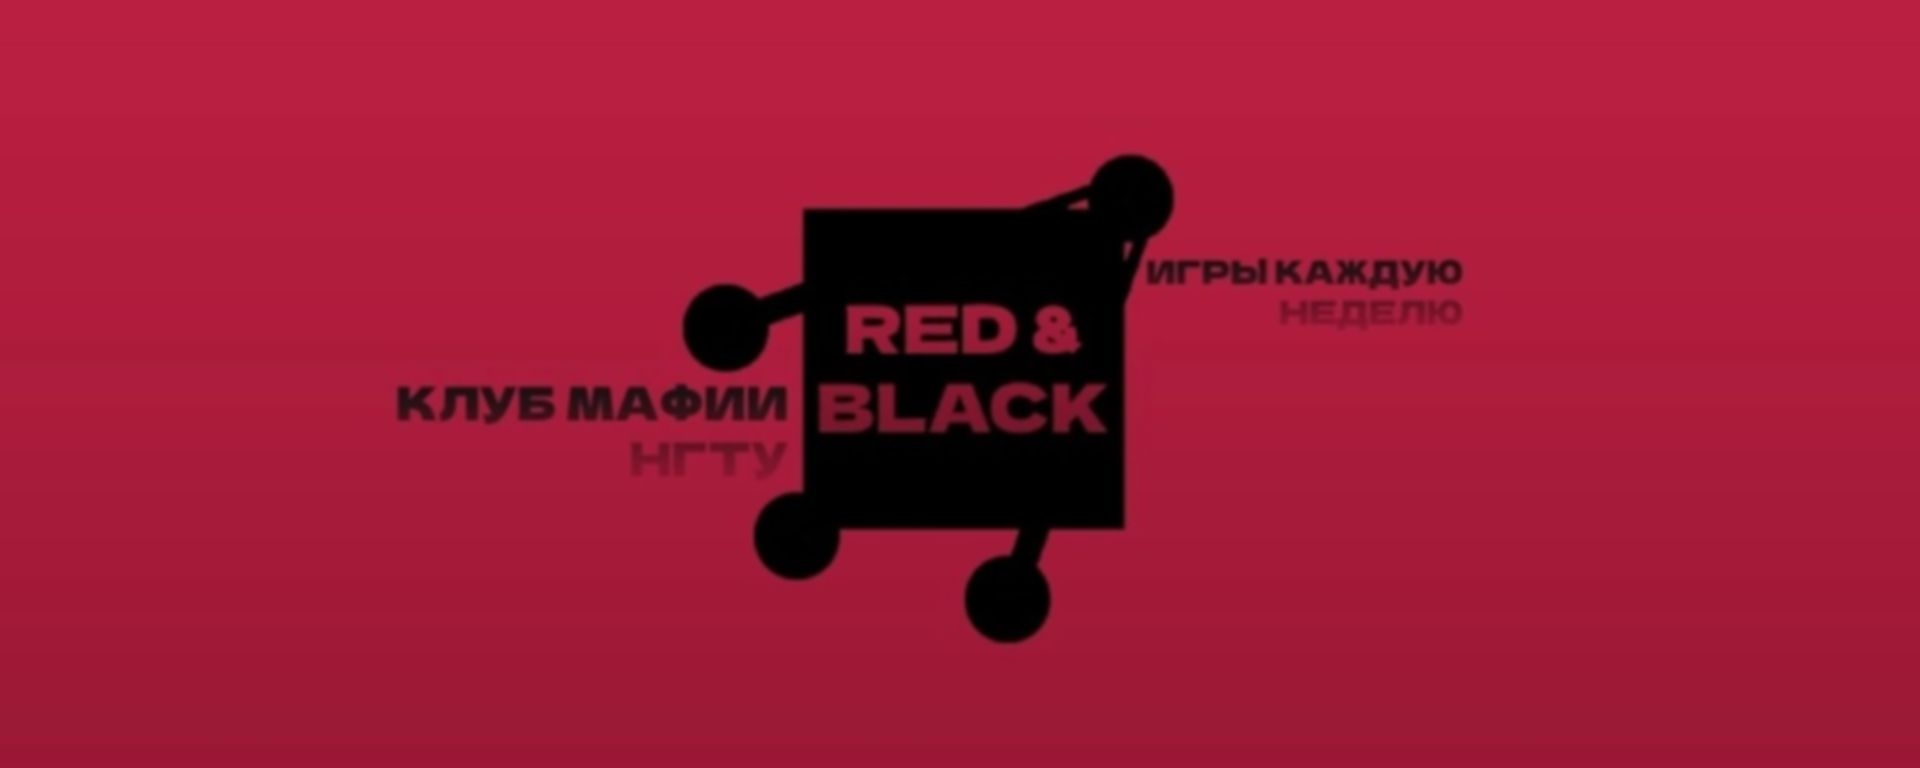 Red&Black | Клуб мафии НГТУ - фото